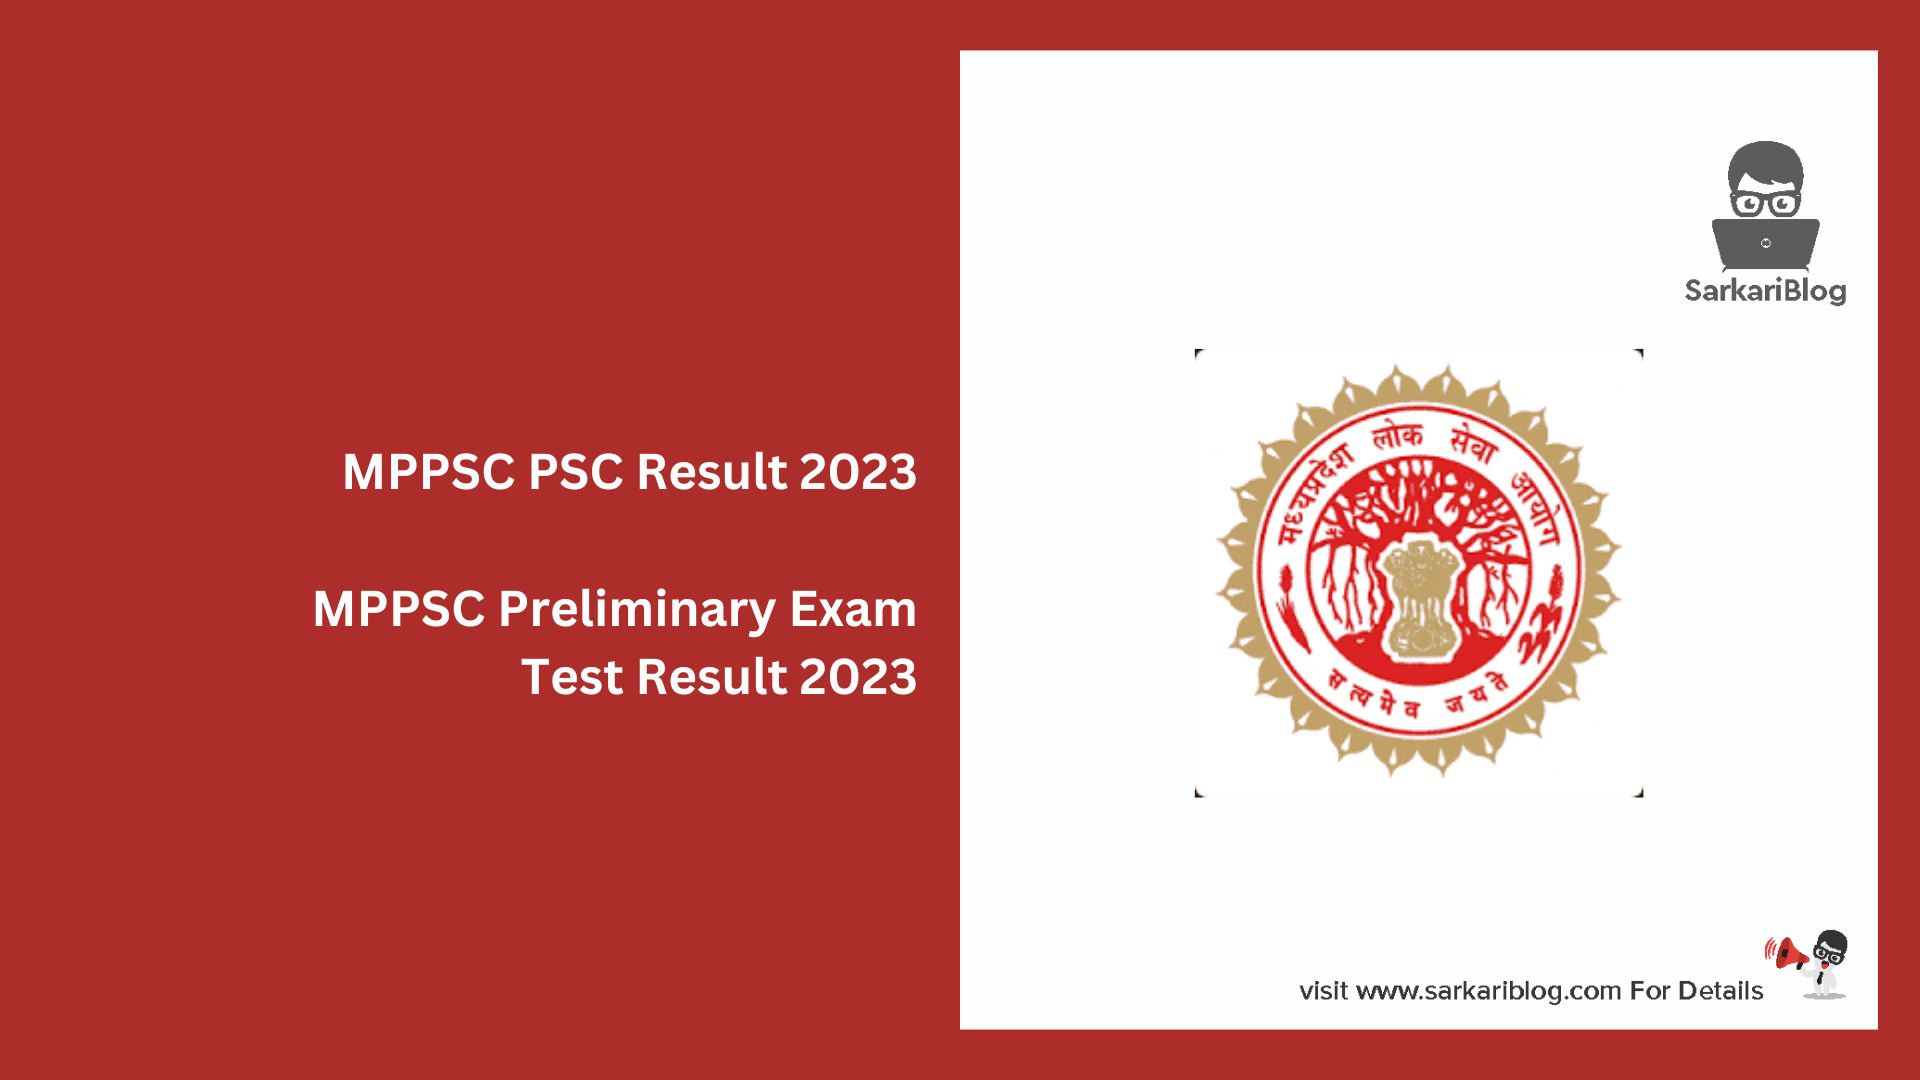 MPPSC PSC Result 2023